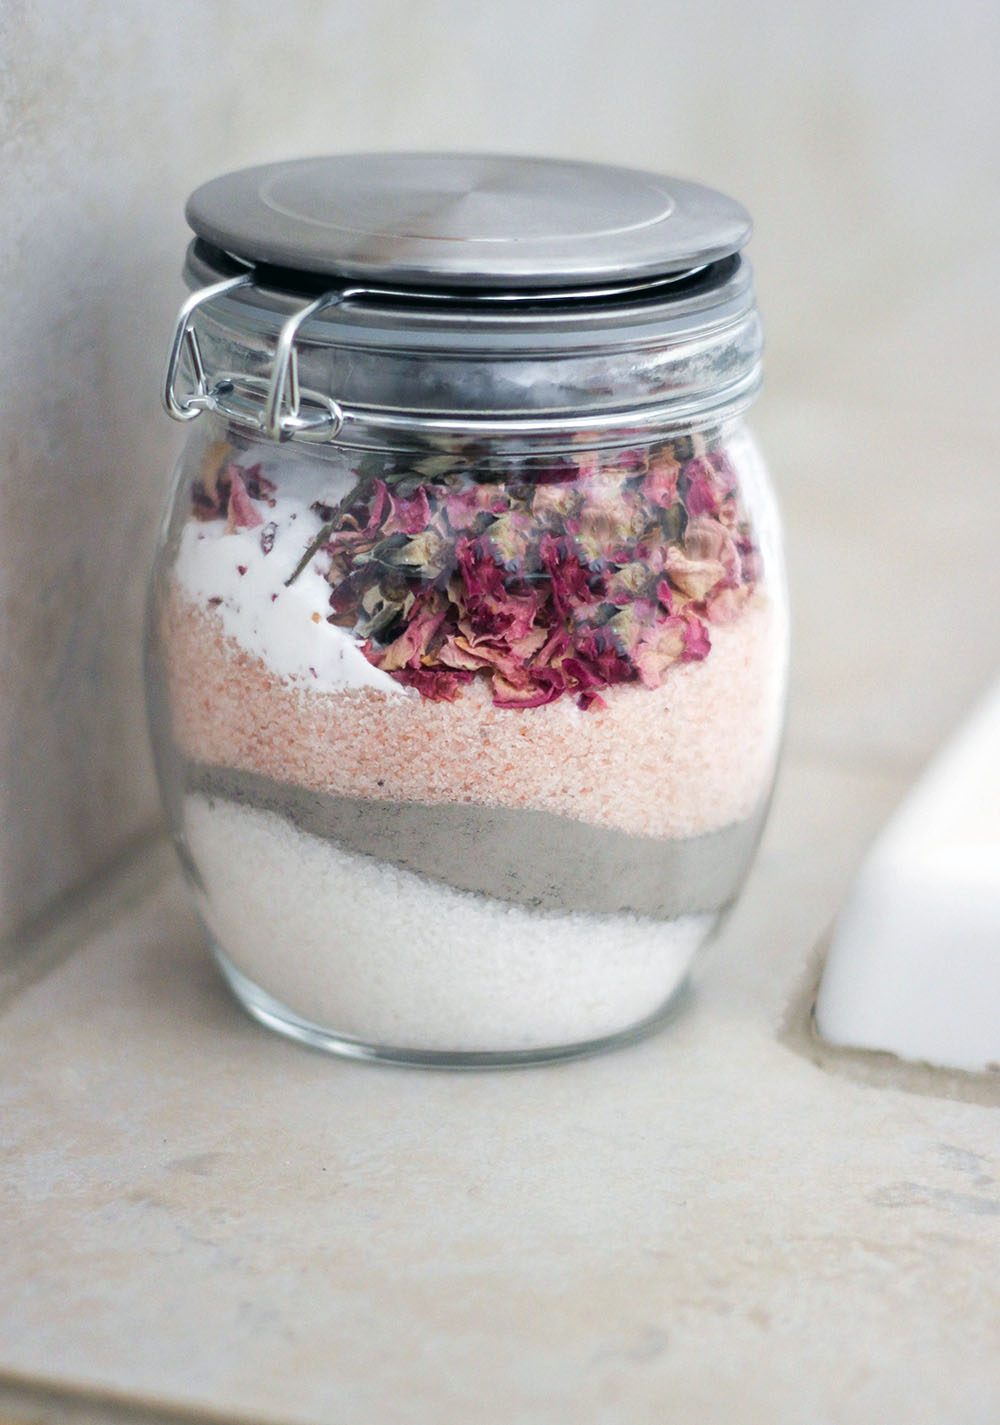 Rose bath salts in a jar